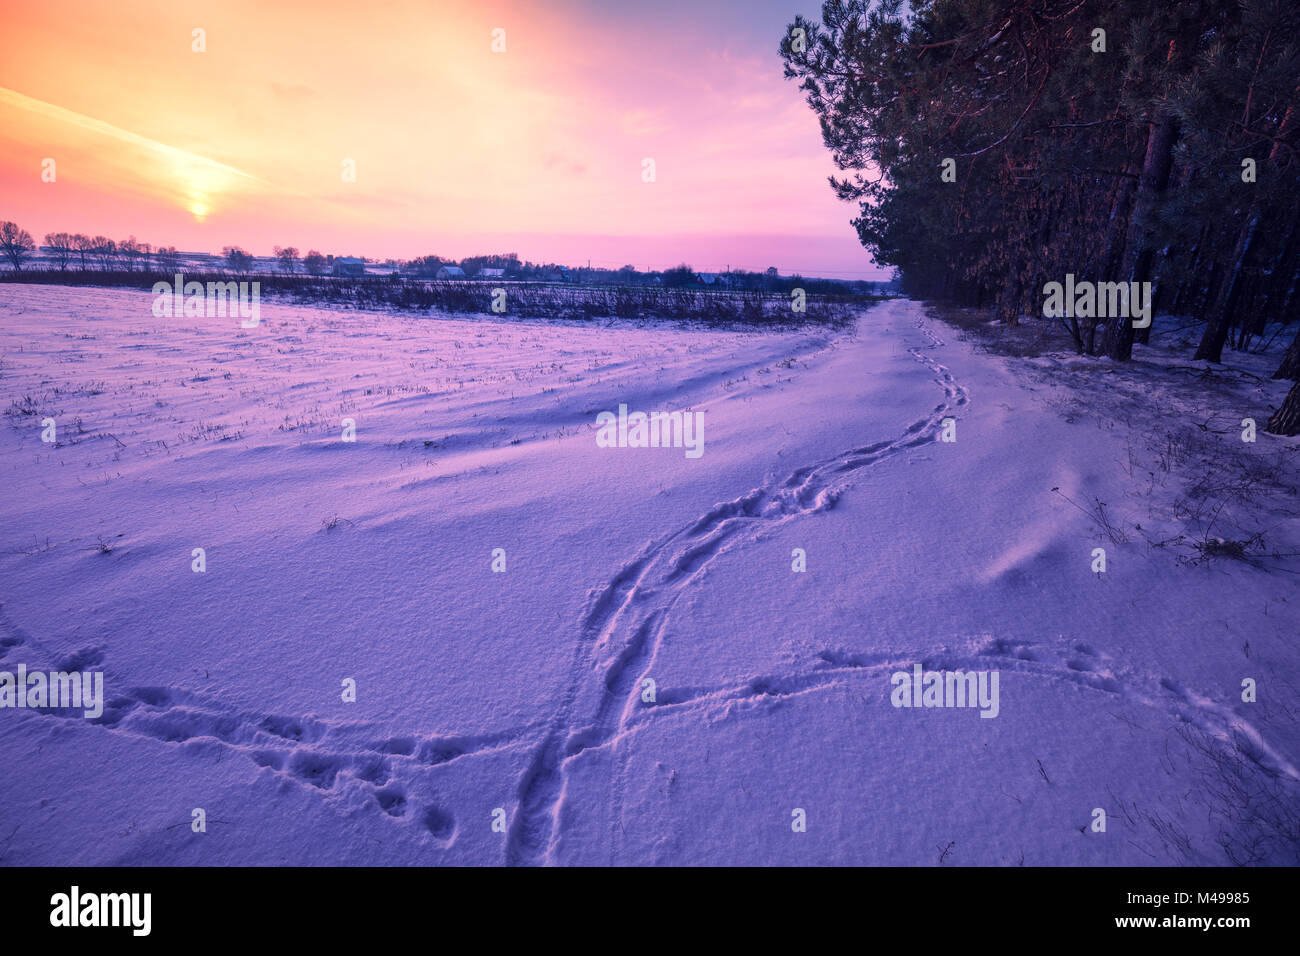 Snowy winter field at sunset light Stock Photo